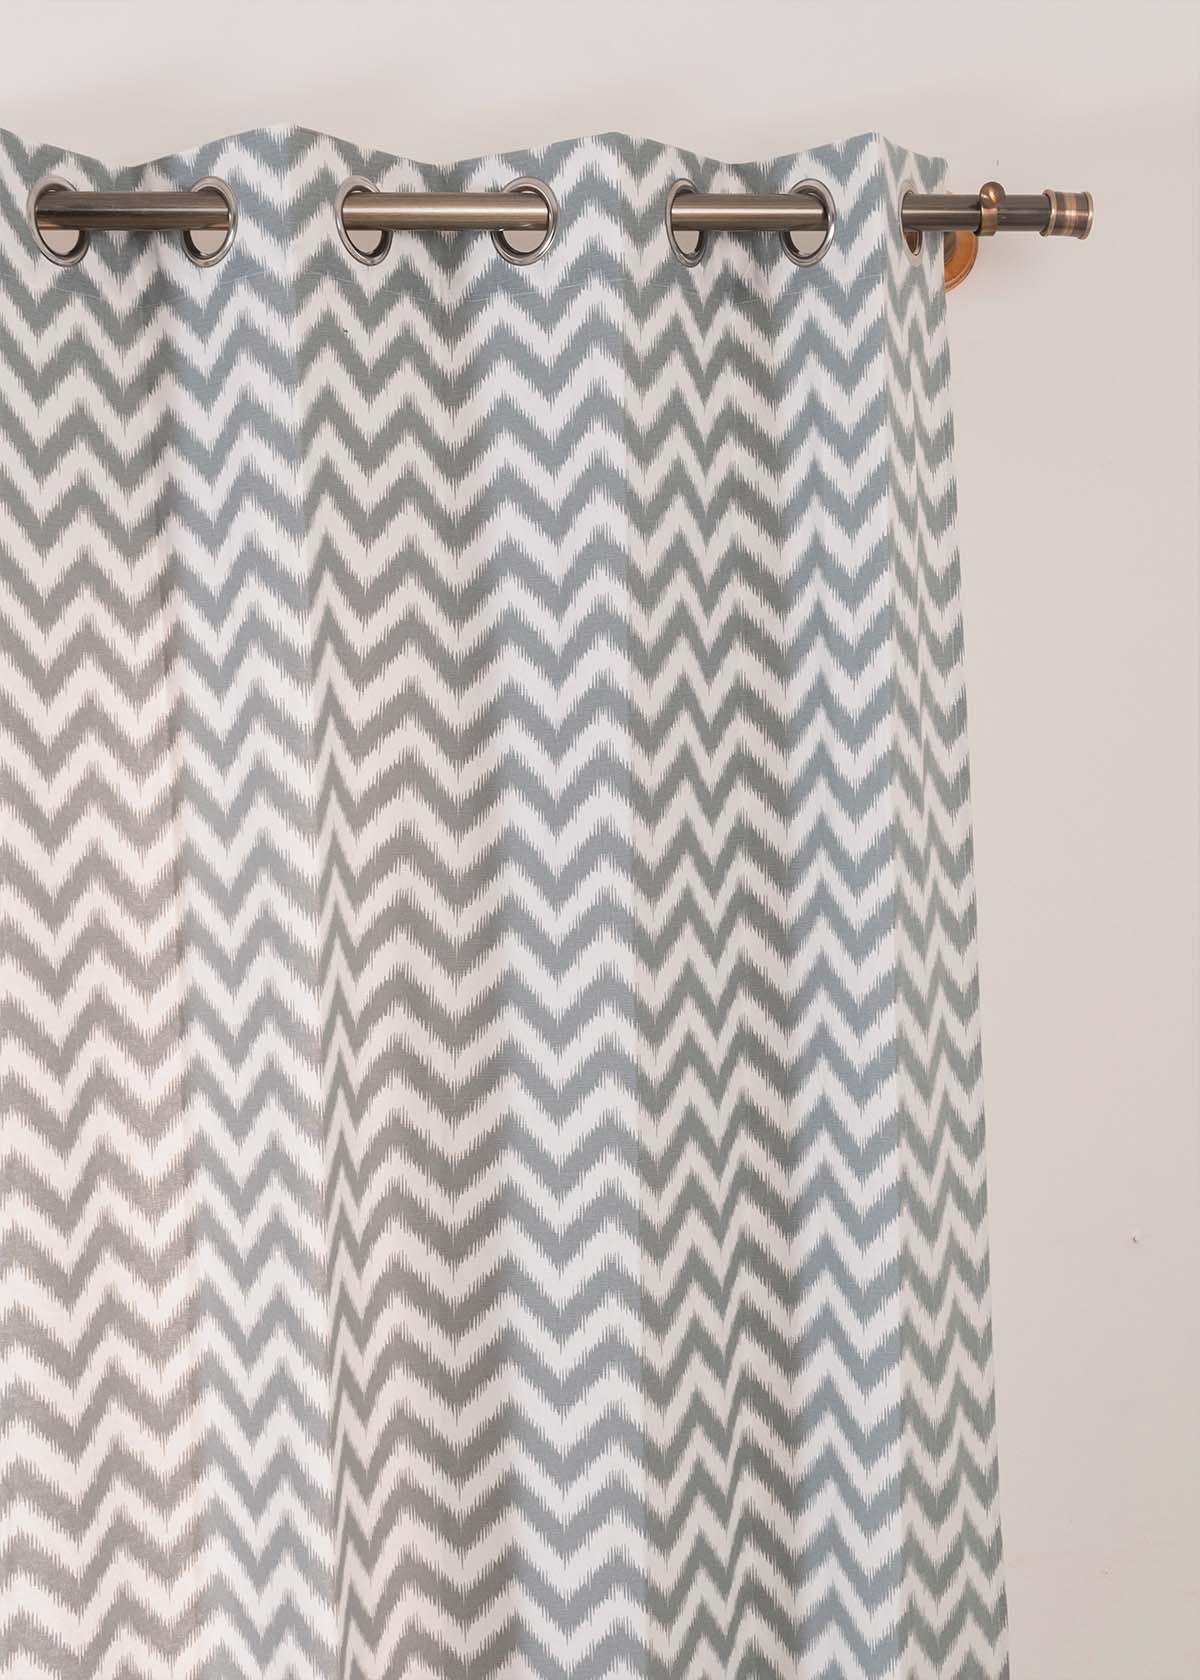 Ikat Chevron 100% Customizable Cotton geometric curtain for living room - Room darkening - Grey